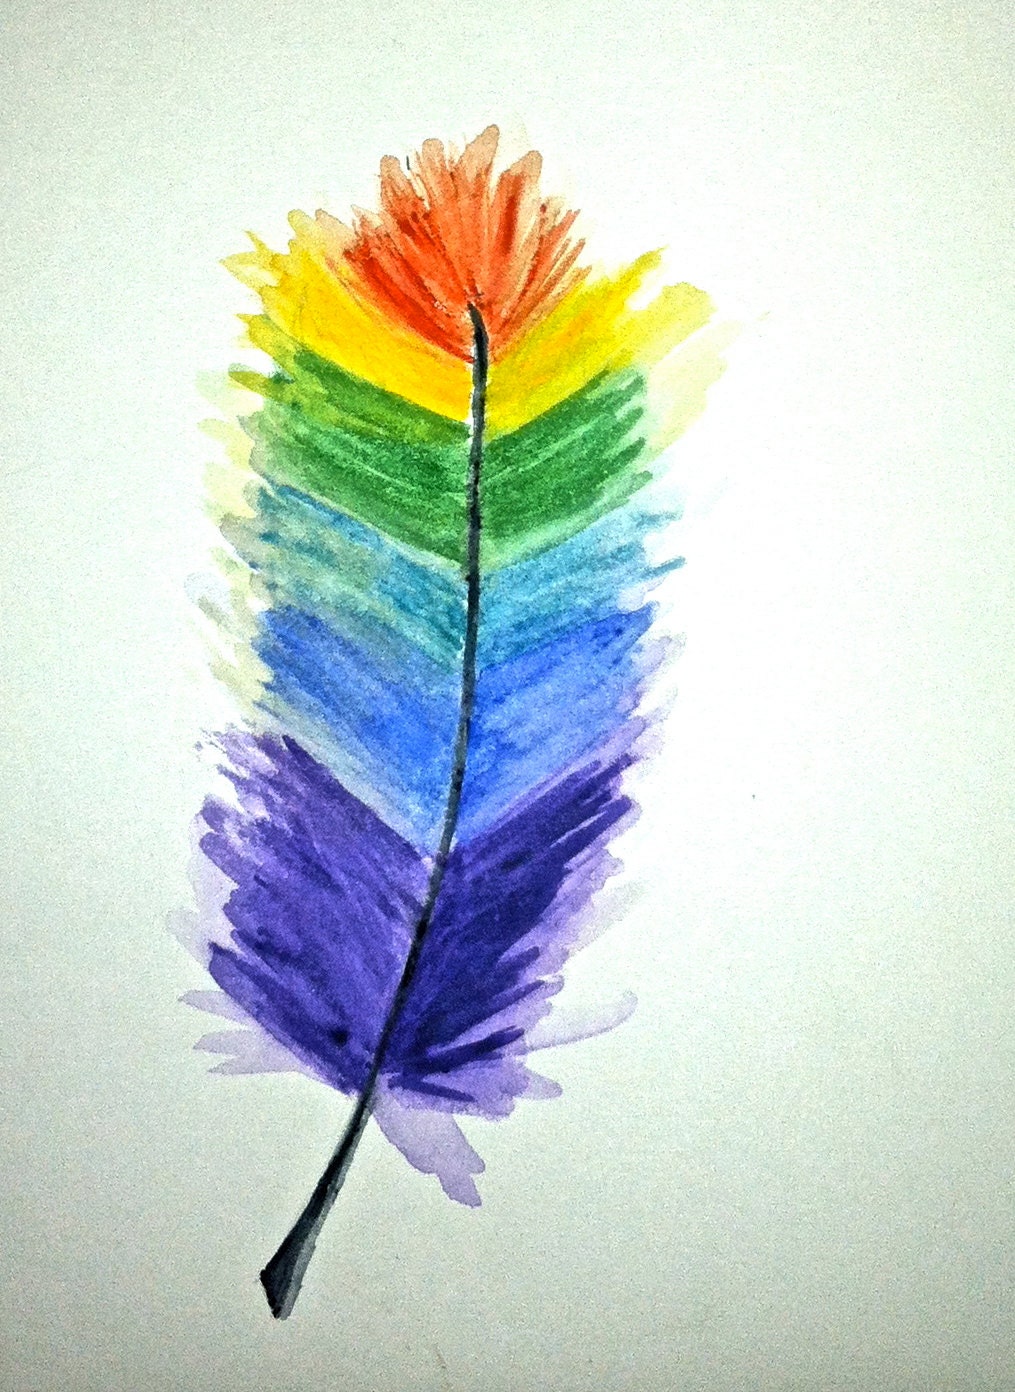 10% off Sale Original Watercolor painting Rainbow Feather 5x7 by Amanda Pennington - PenningtonArt